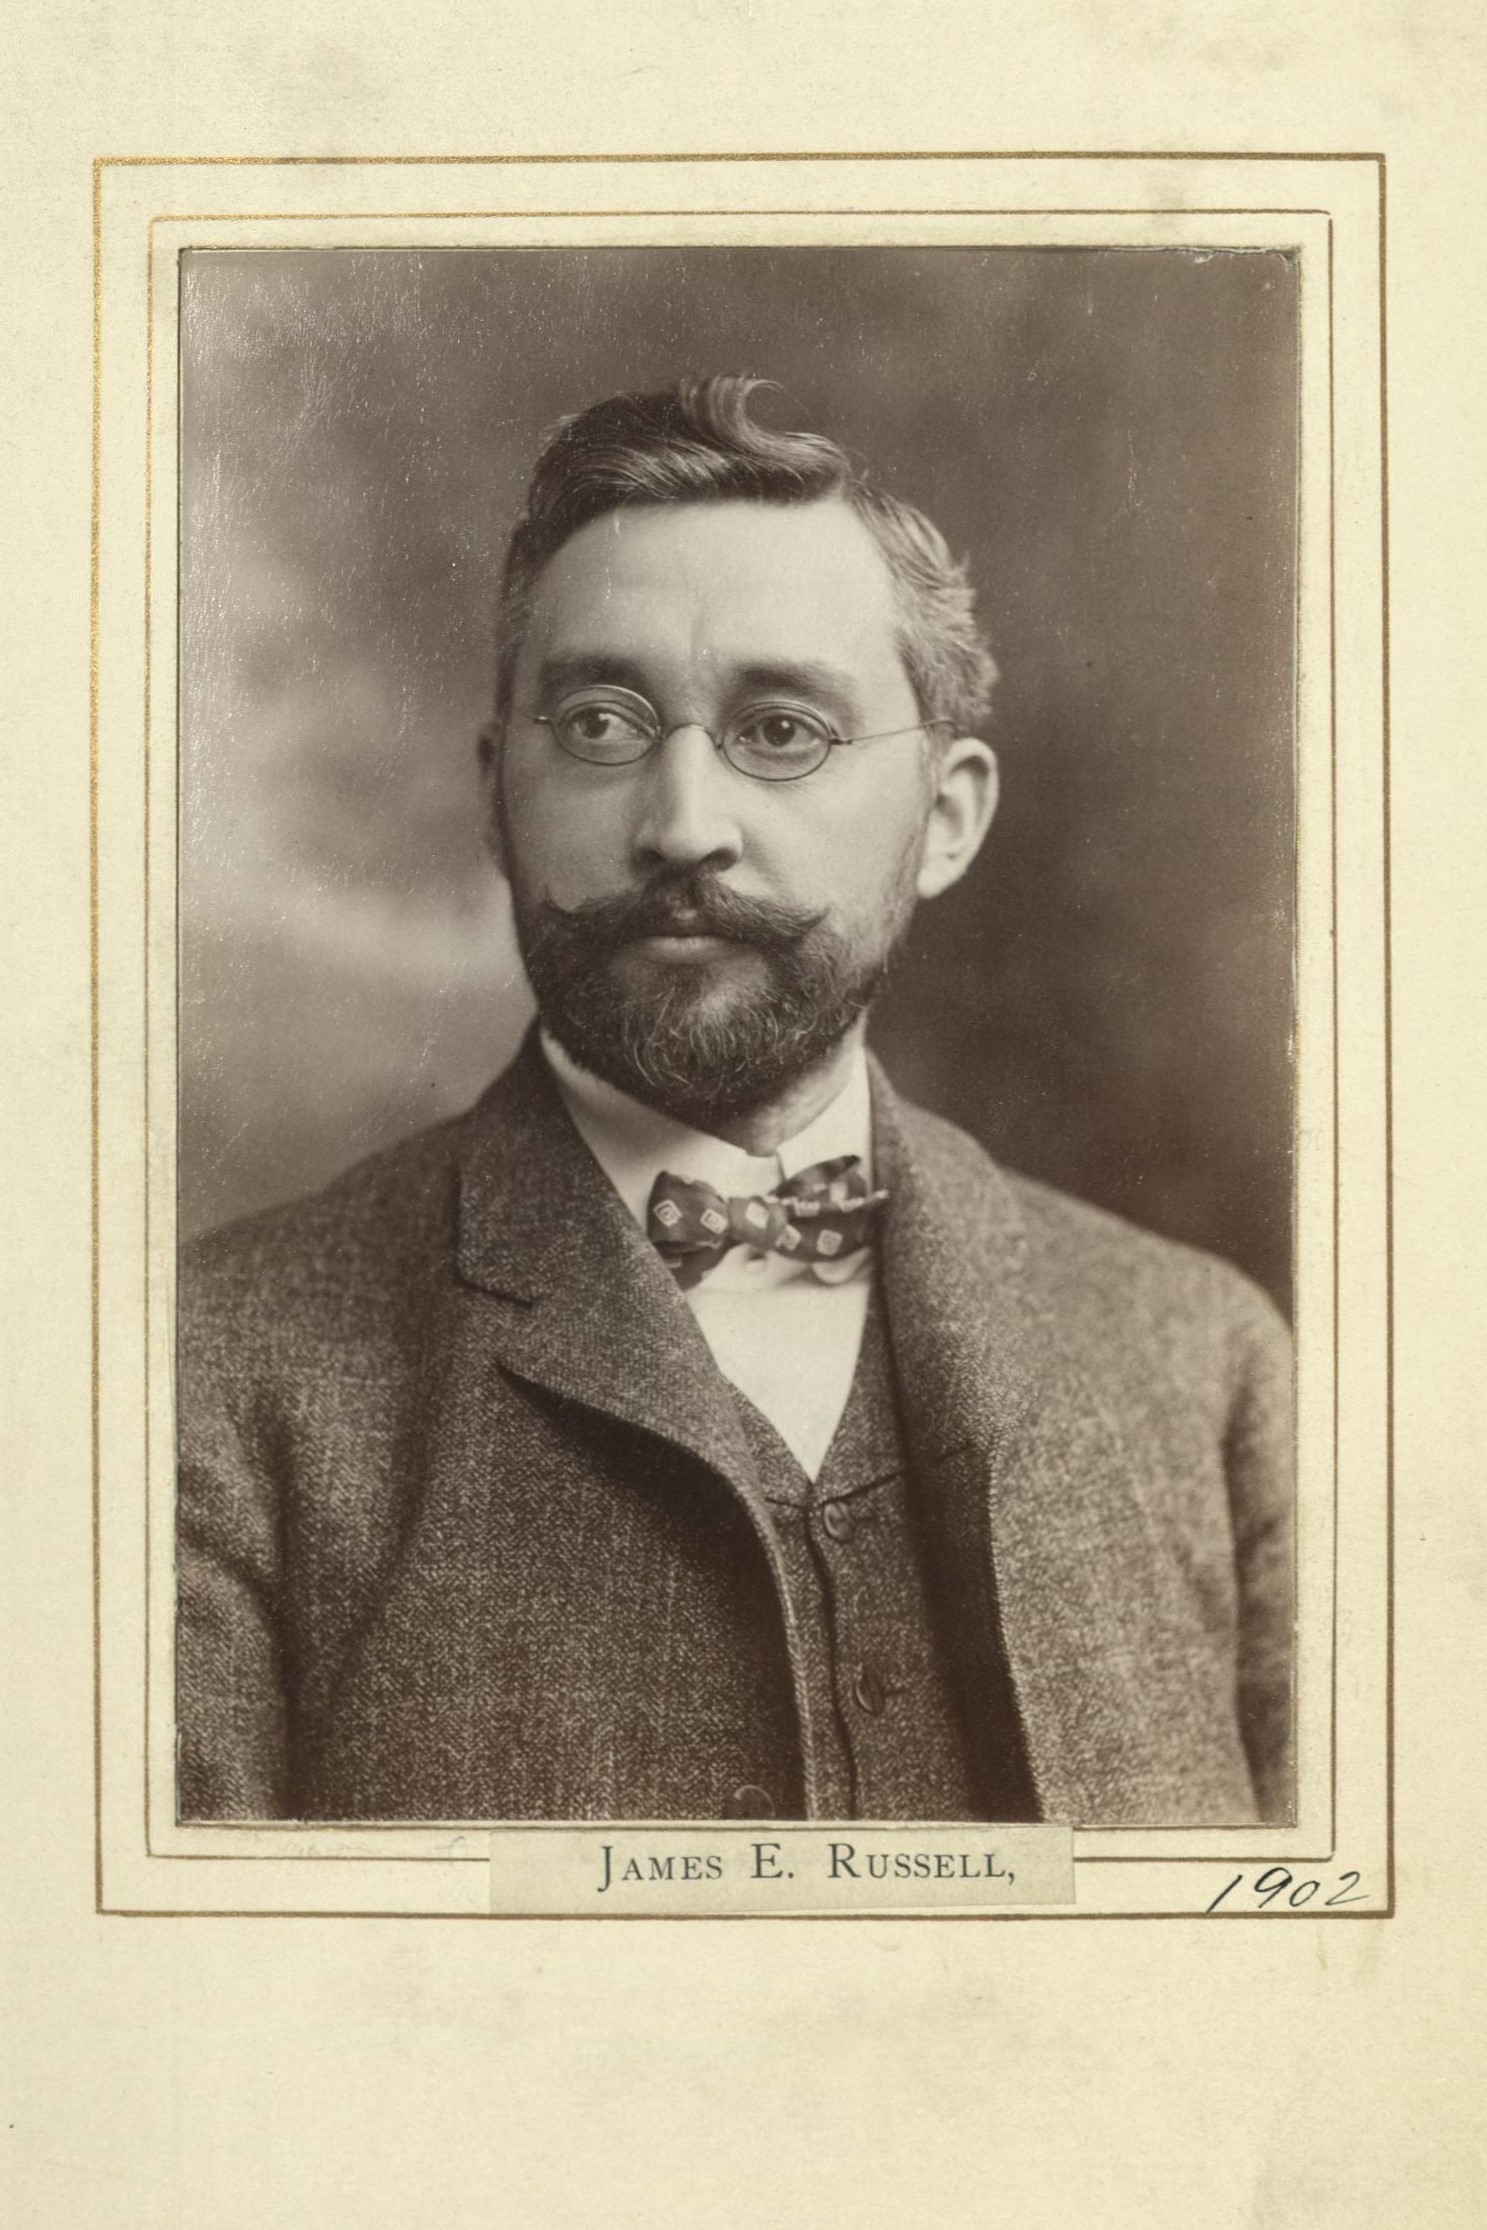 Member portrait of James E. Russell